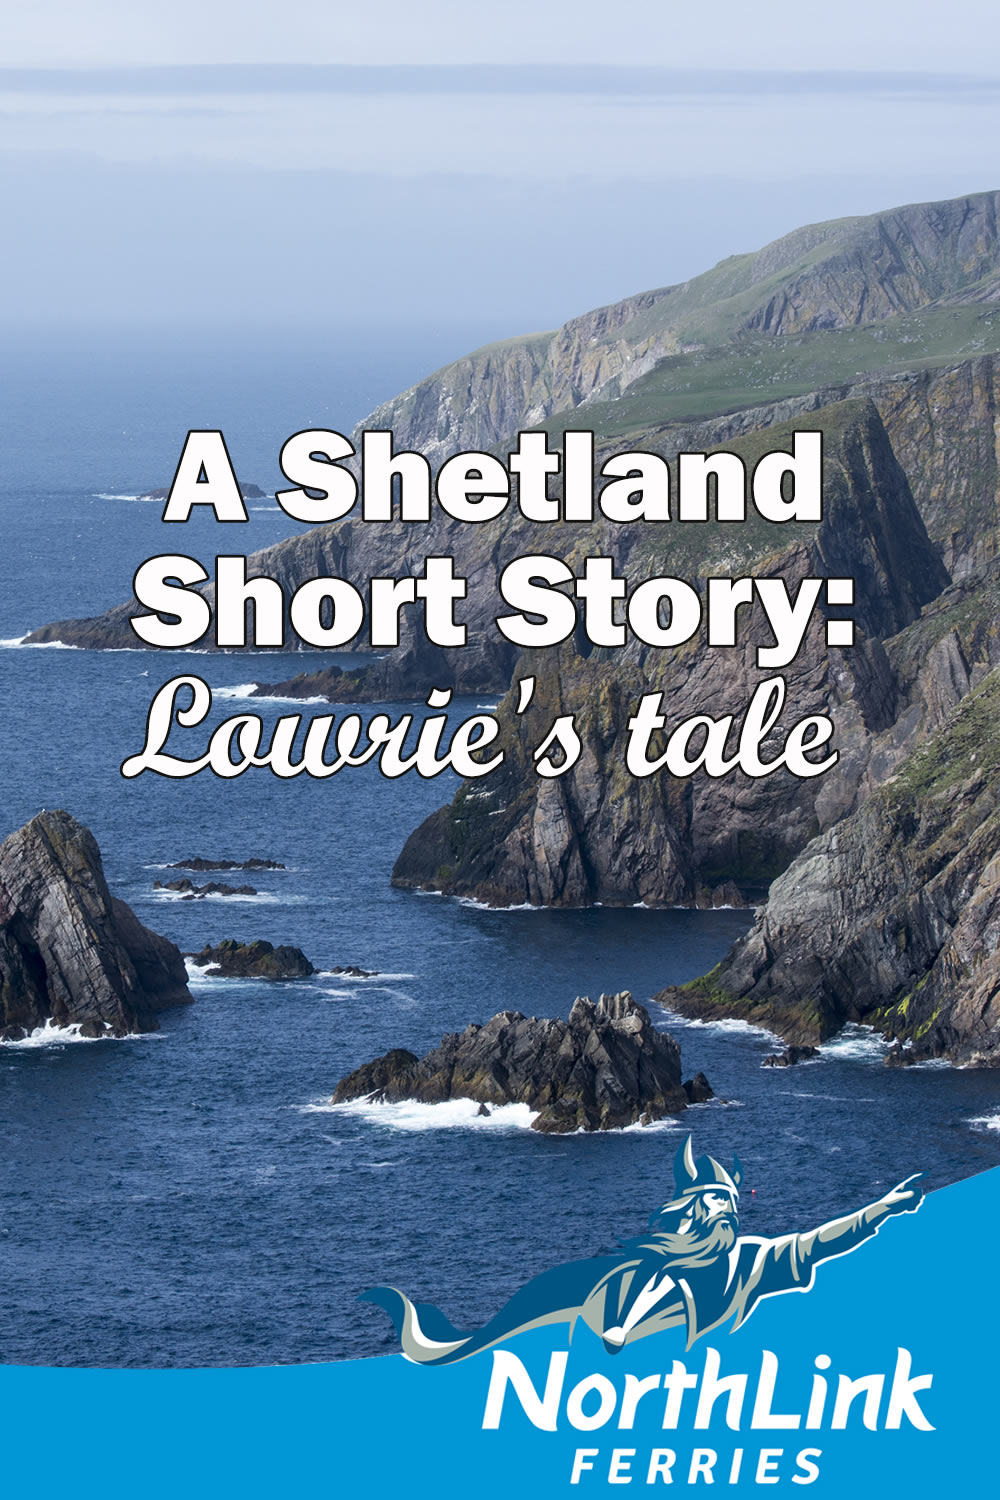 A Shetland Short Story: Lowrie's tale